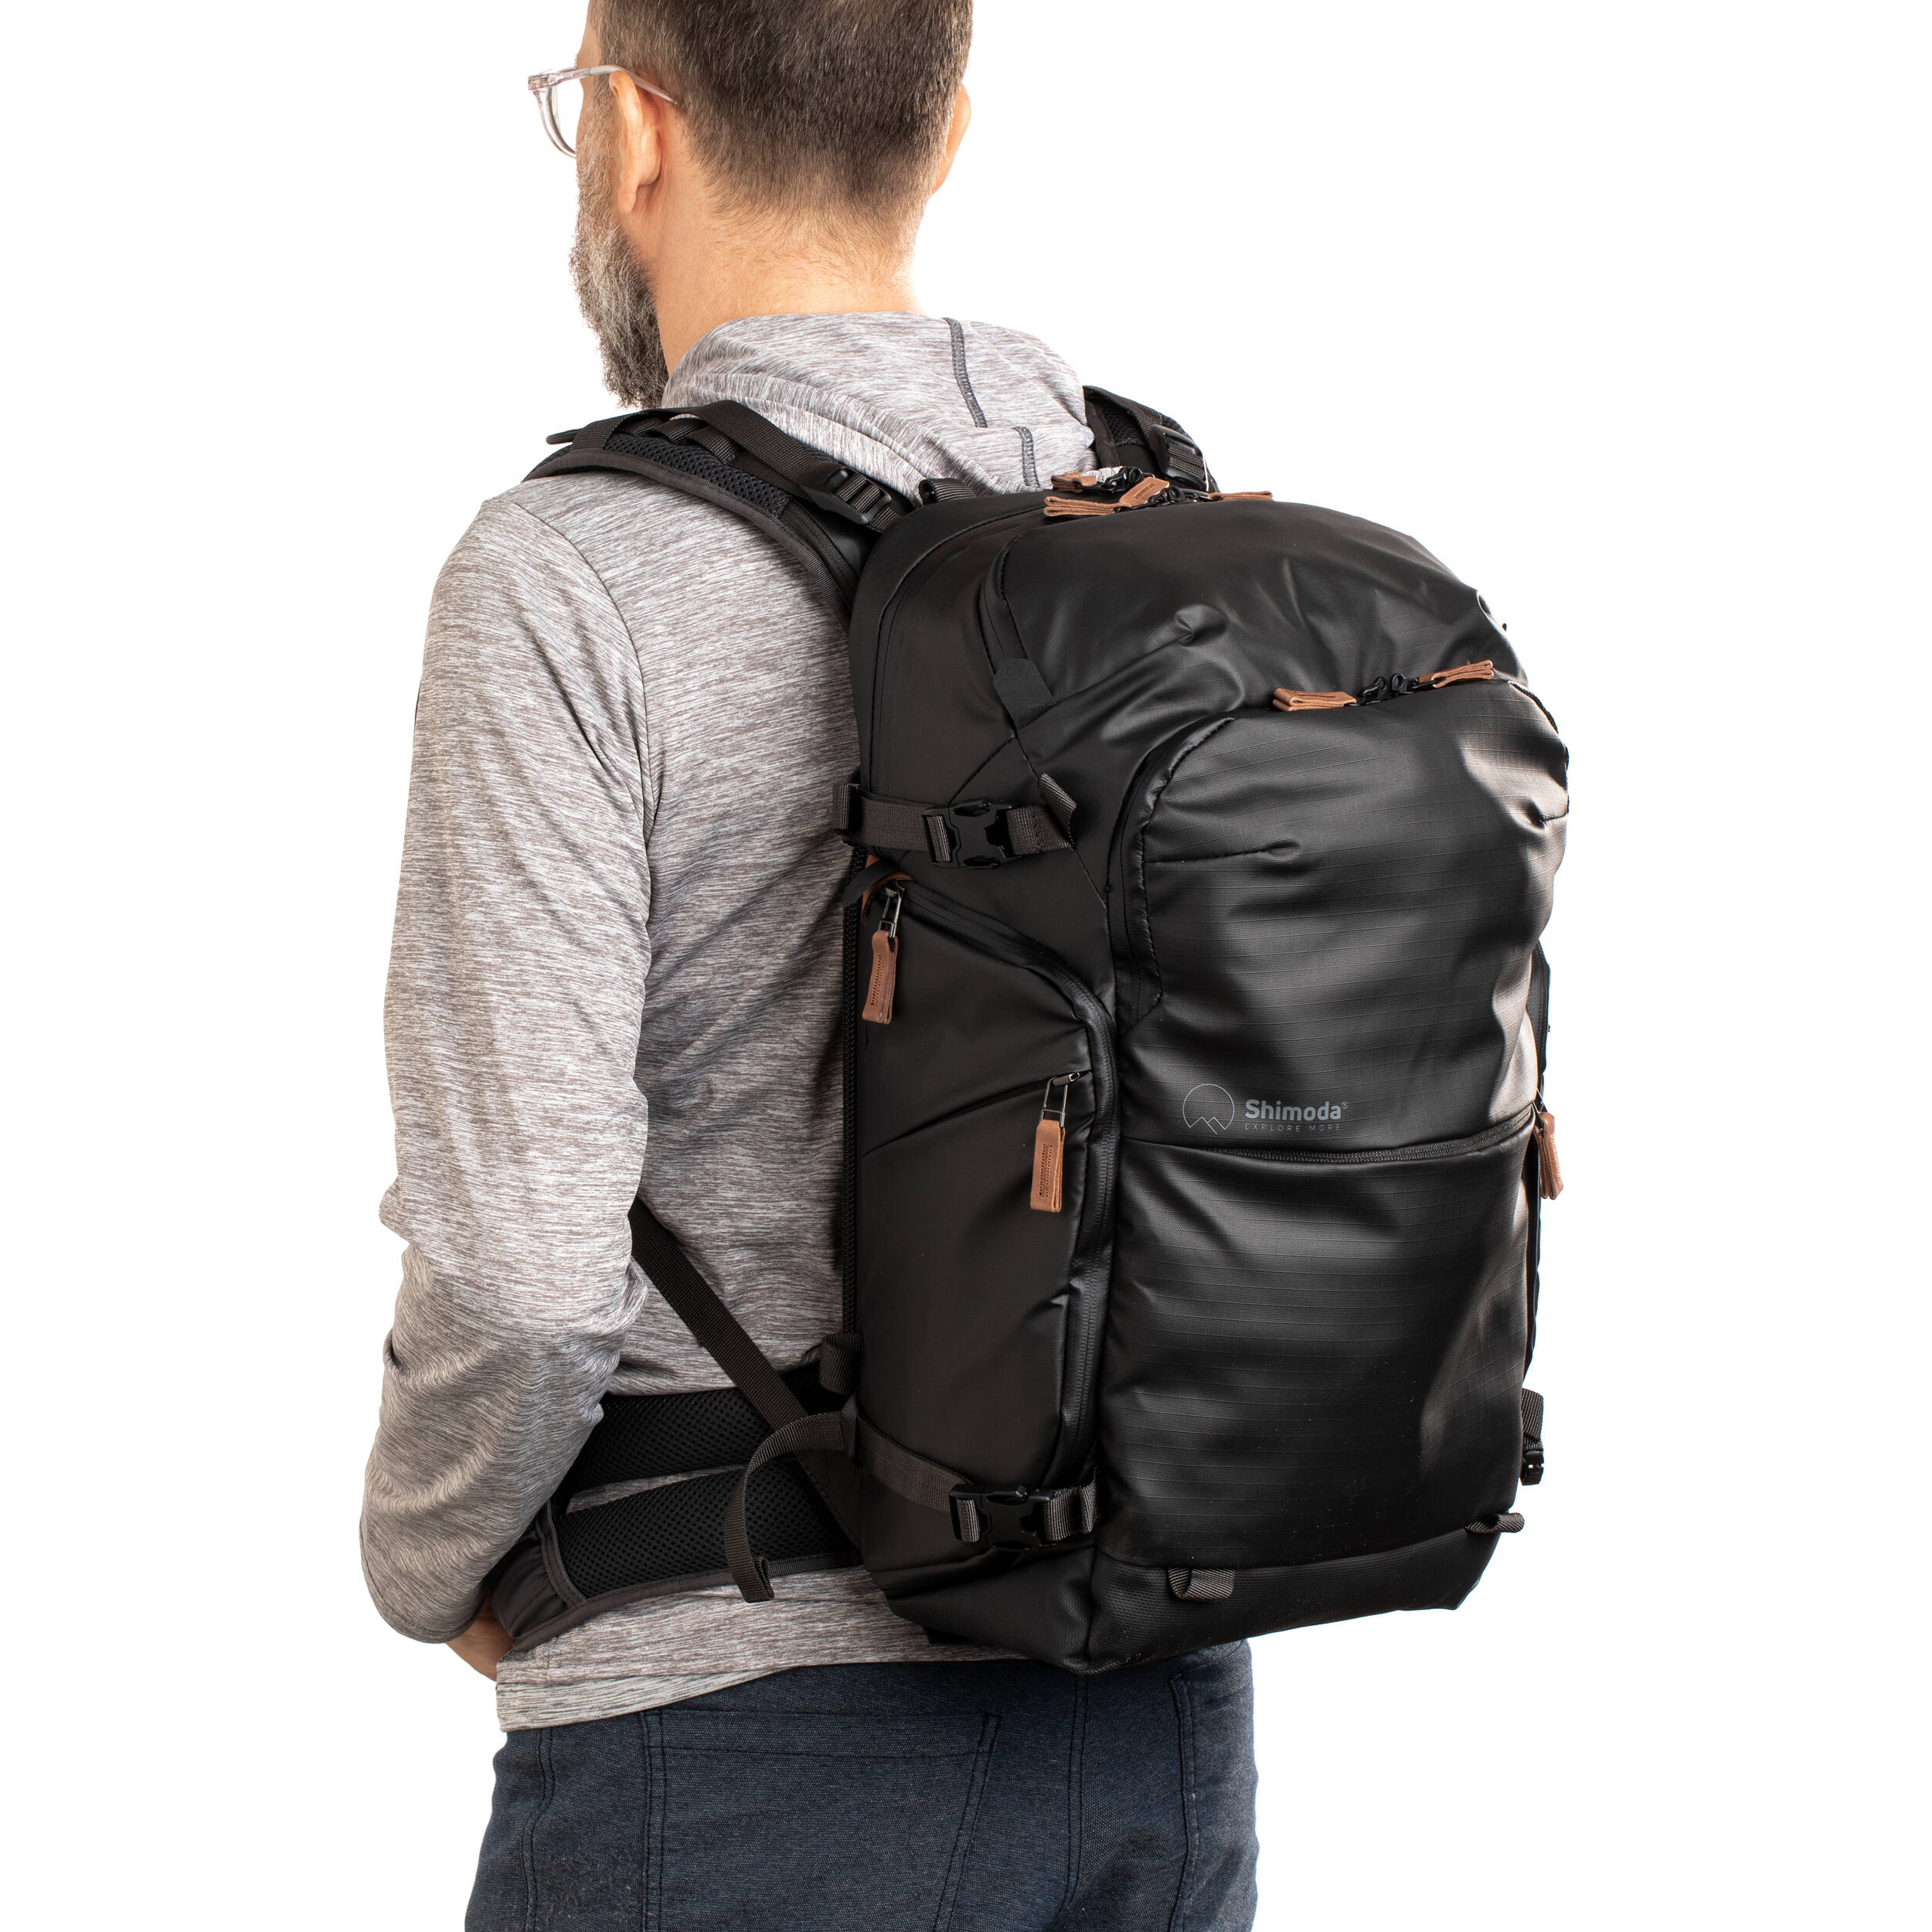 Backpack Shimoda Explore V2 25 black